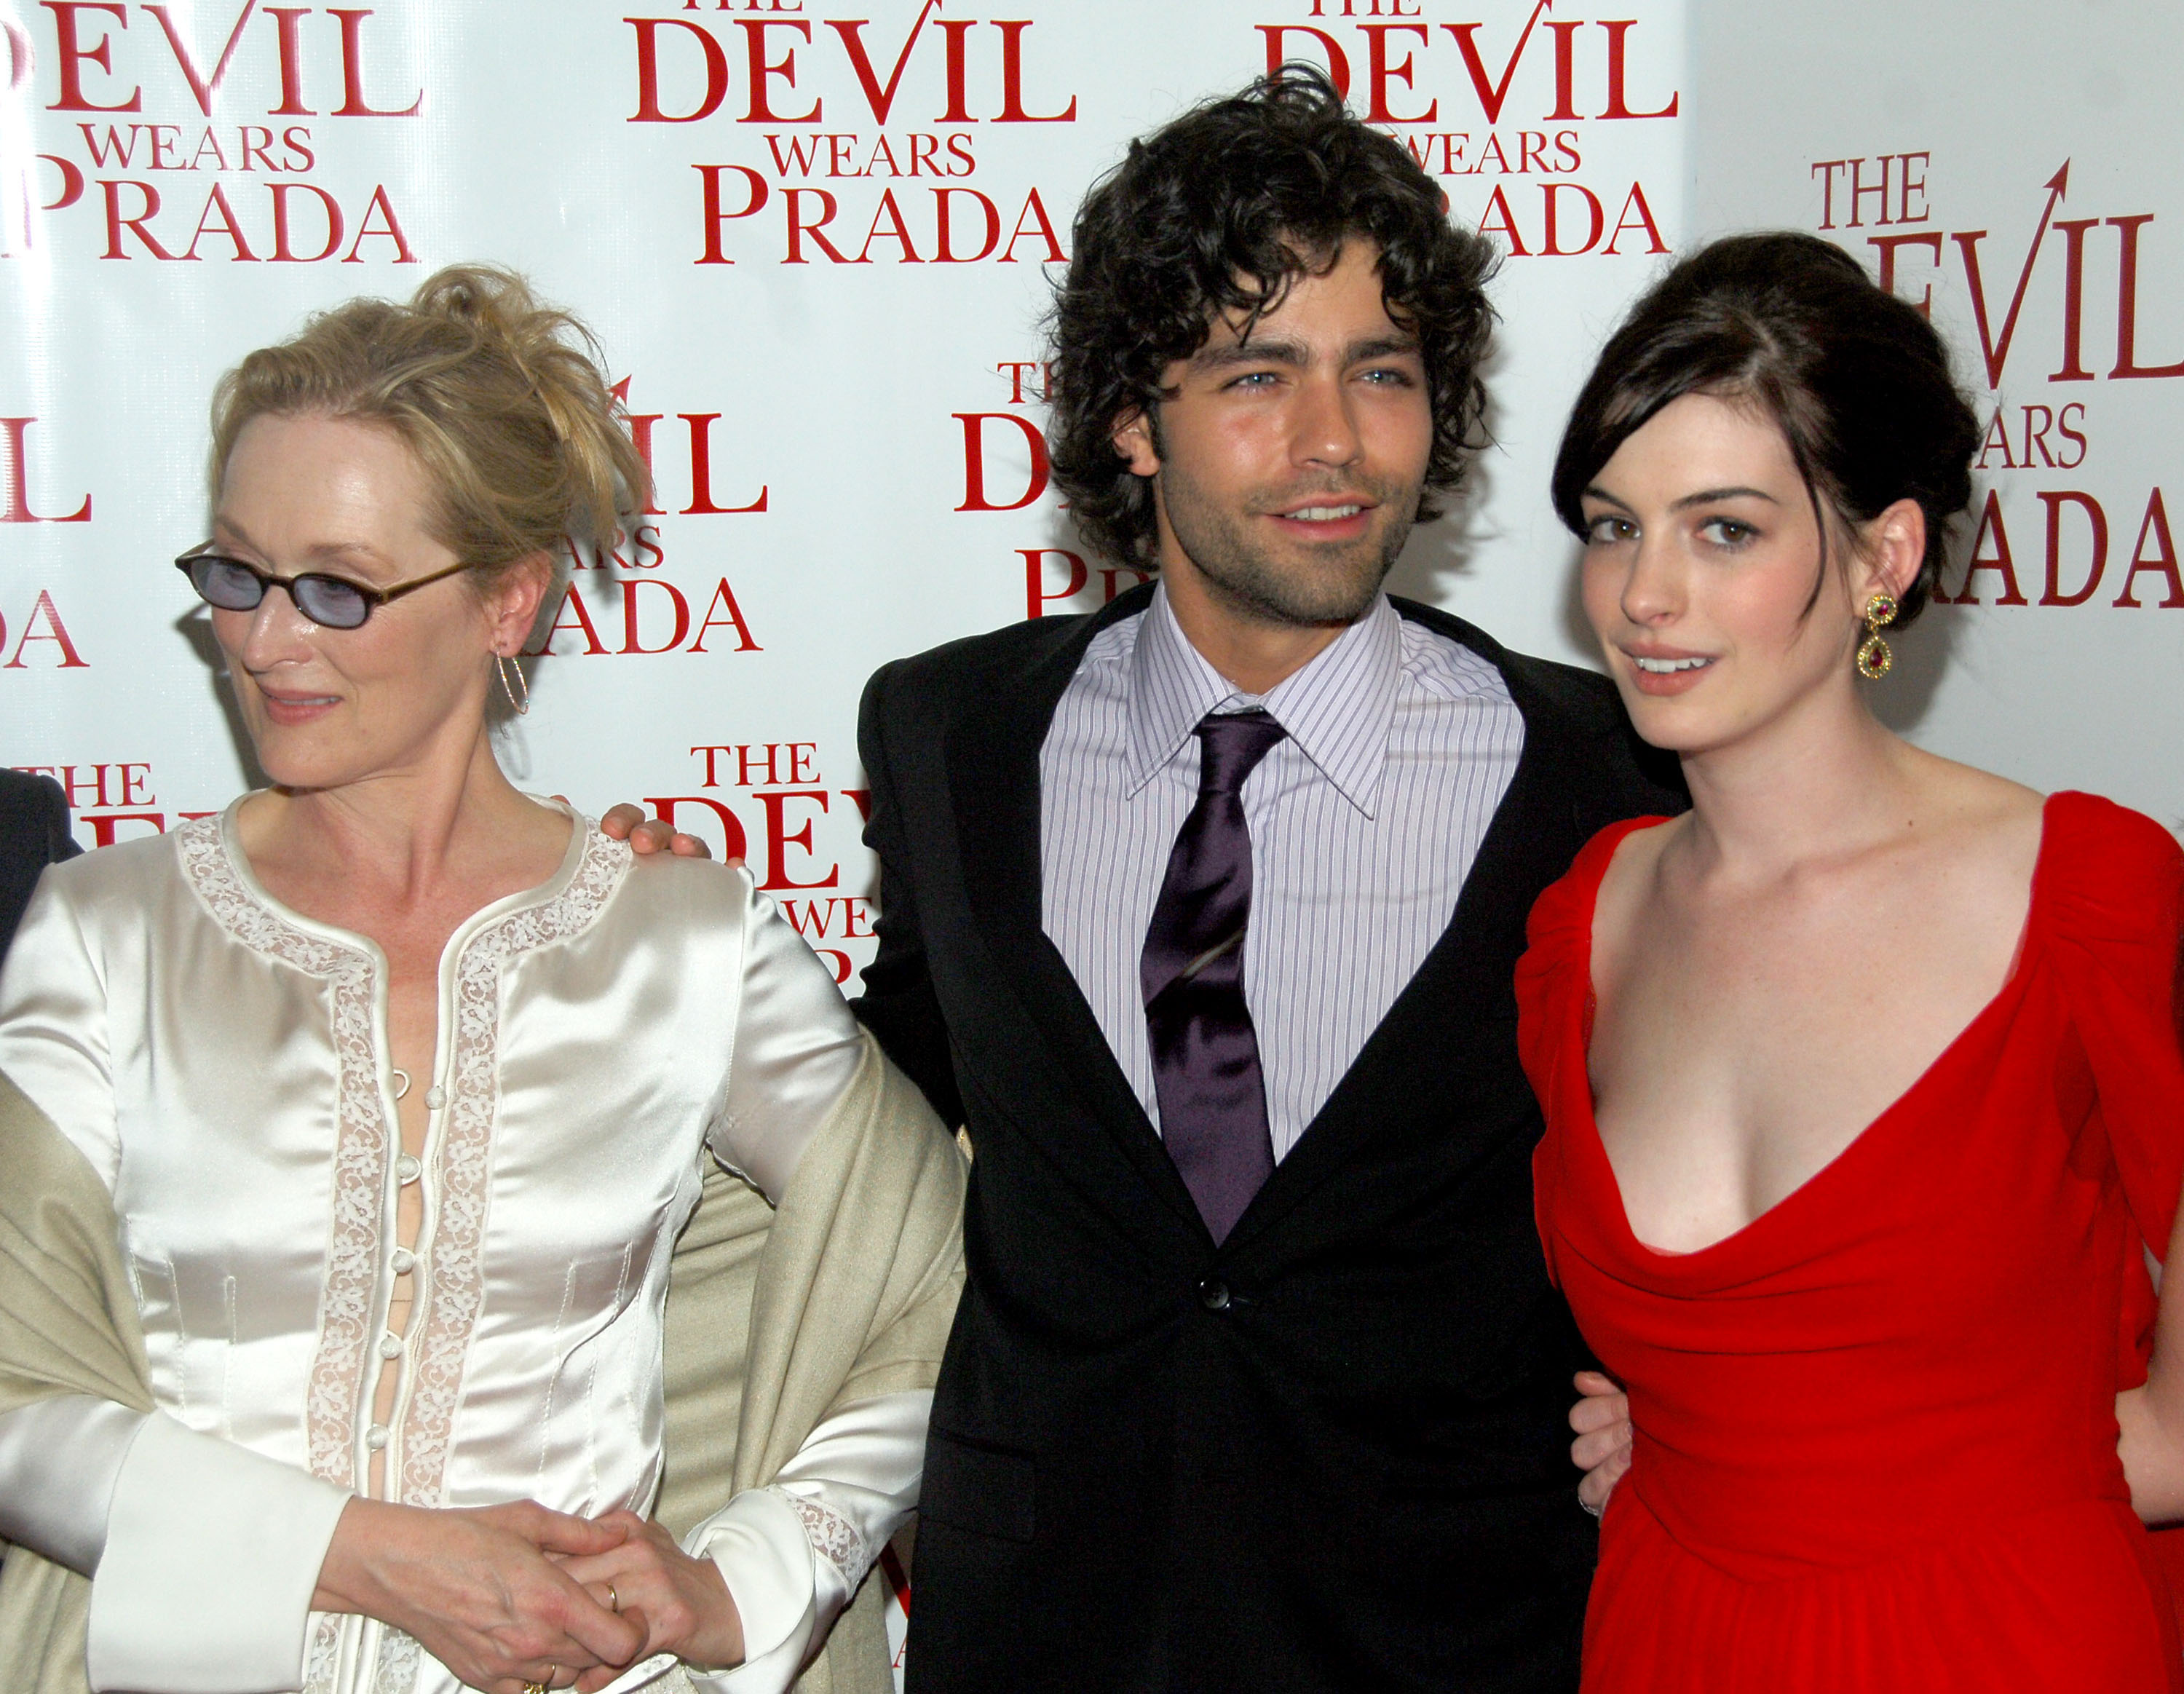 'The Devil Wears Prada' cast members Meryl Streep, Adrian Grenier, and Anne Hathaway at the movie's premiere.